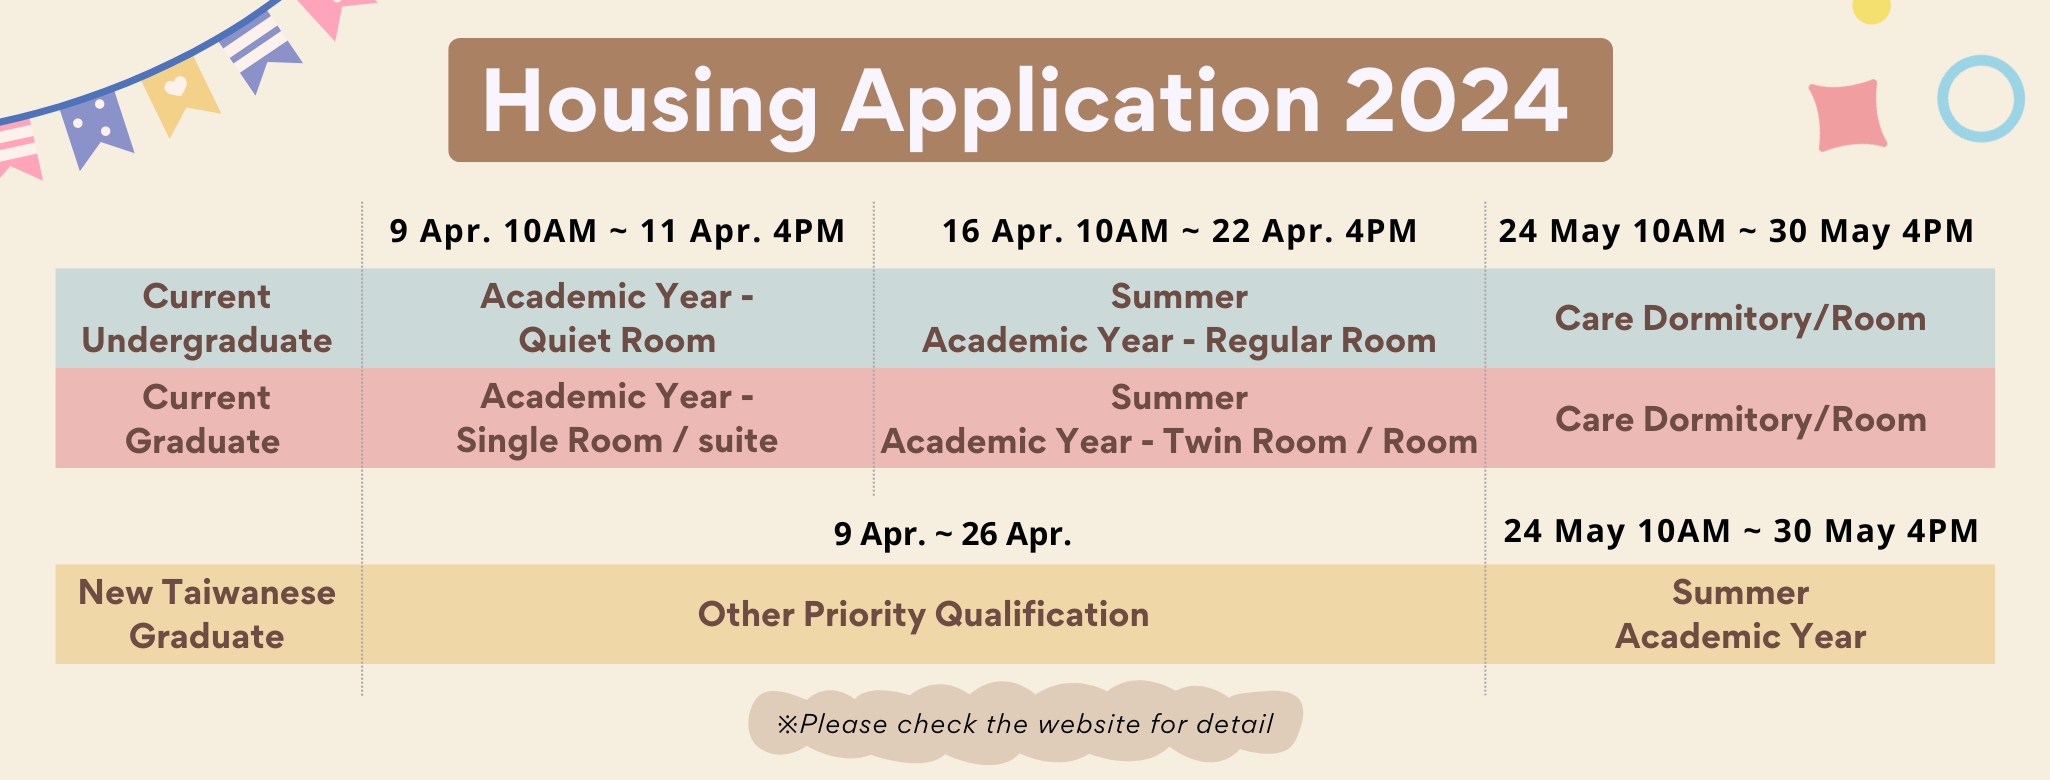 Housing Application Schedule 2024